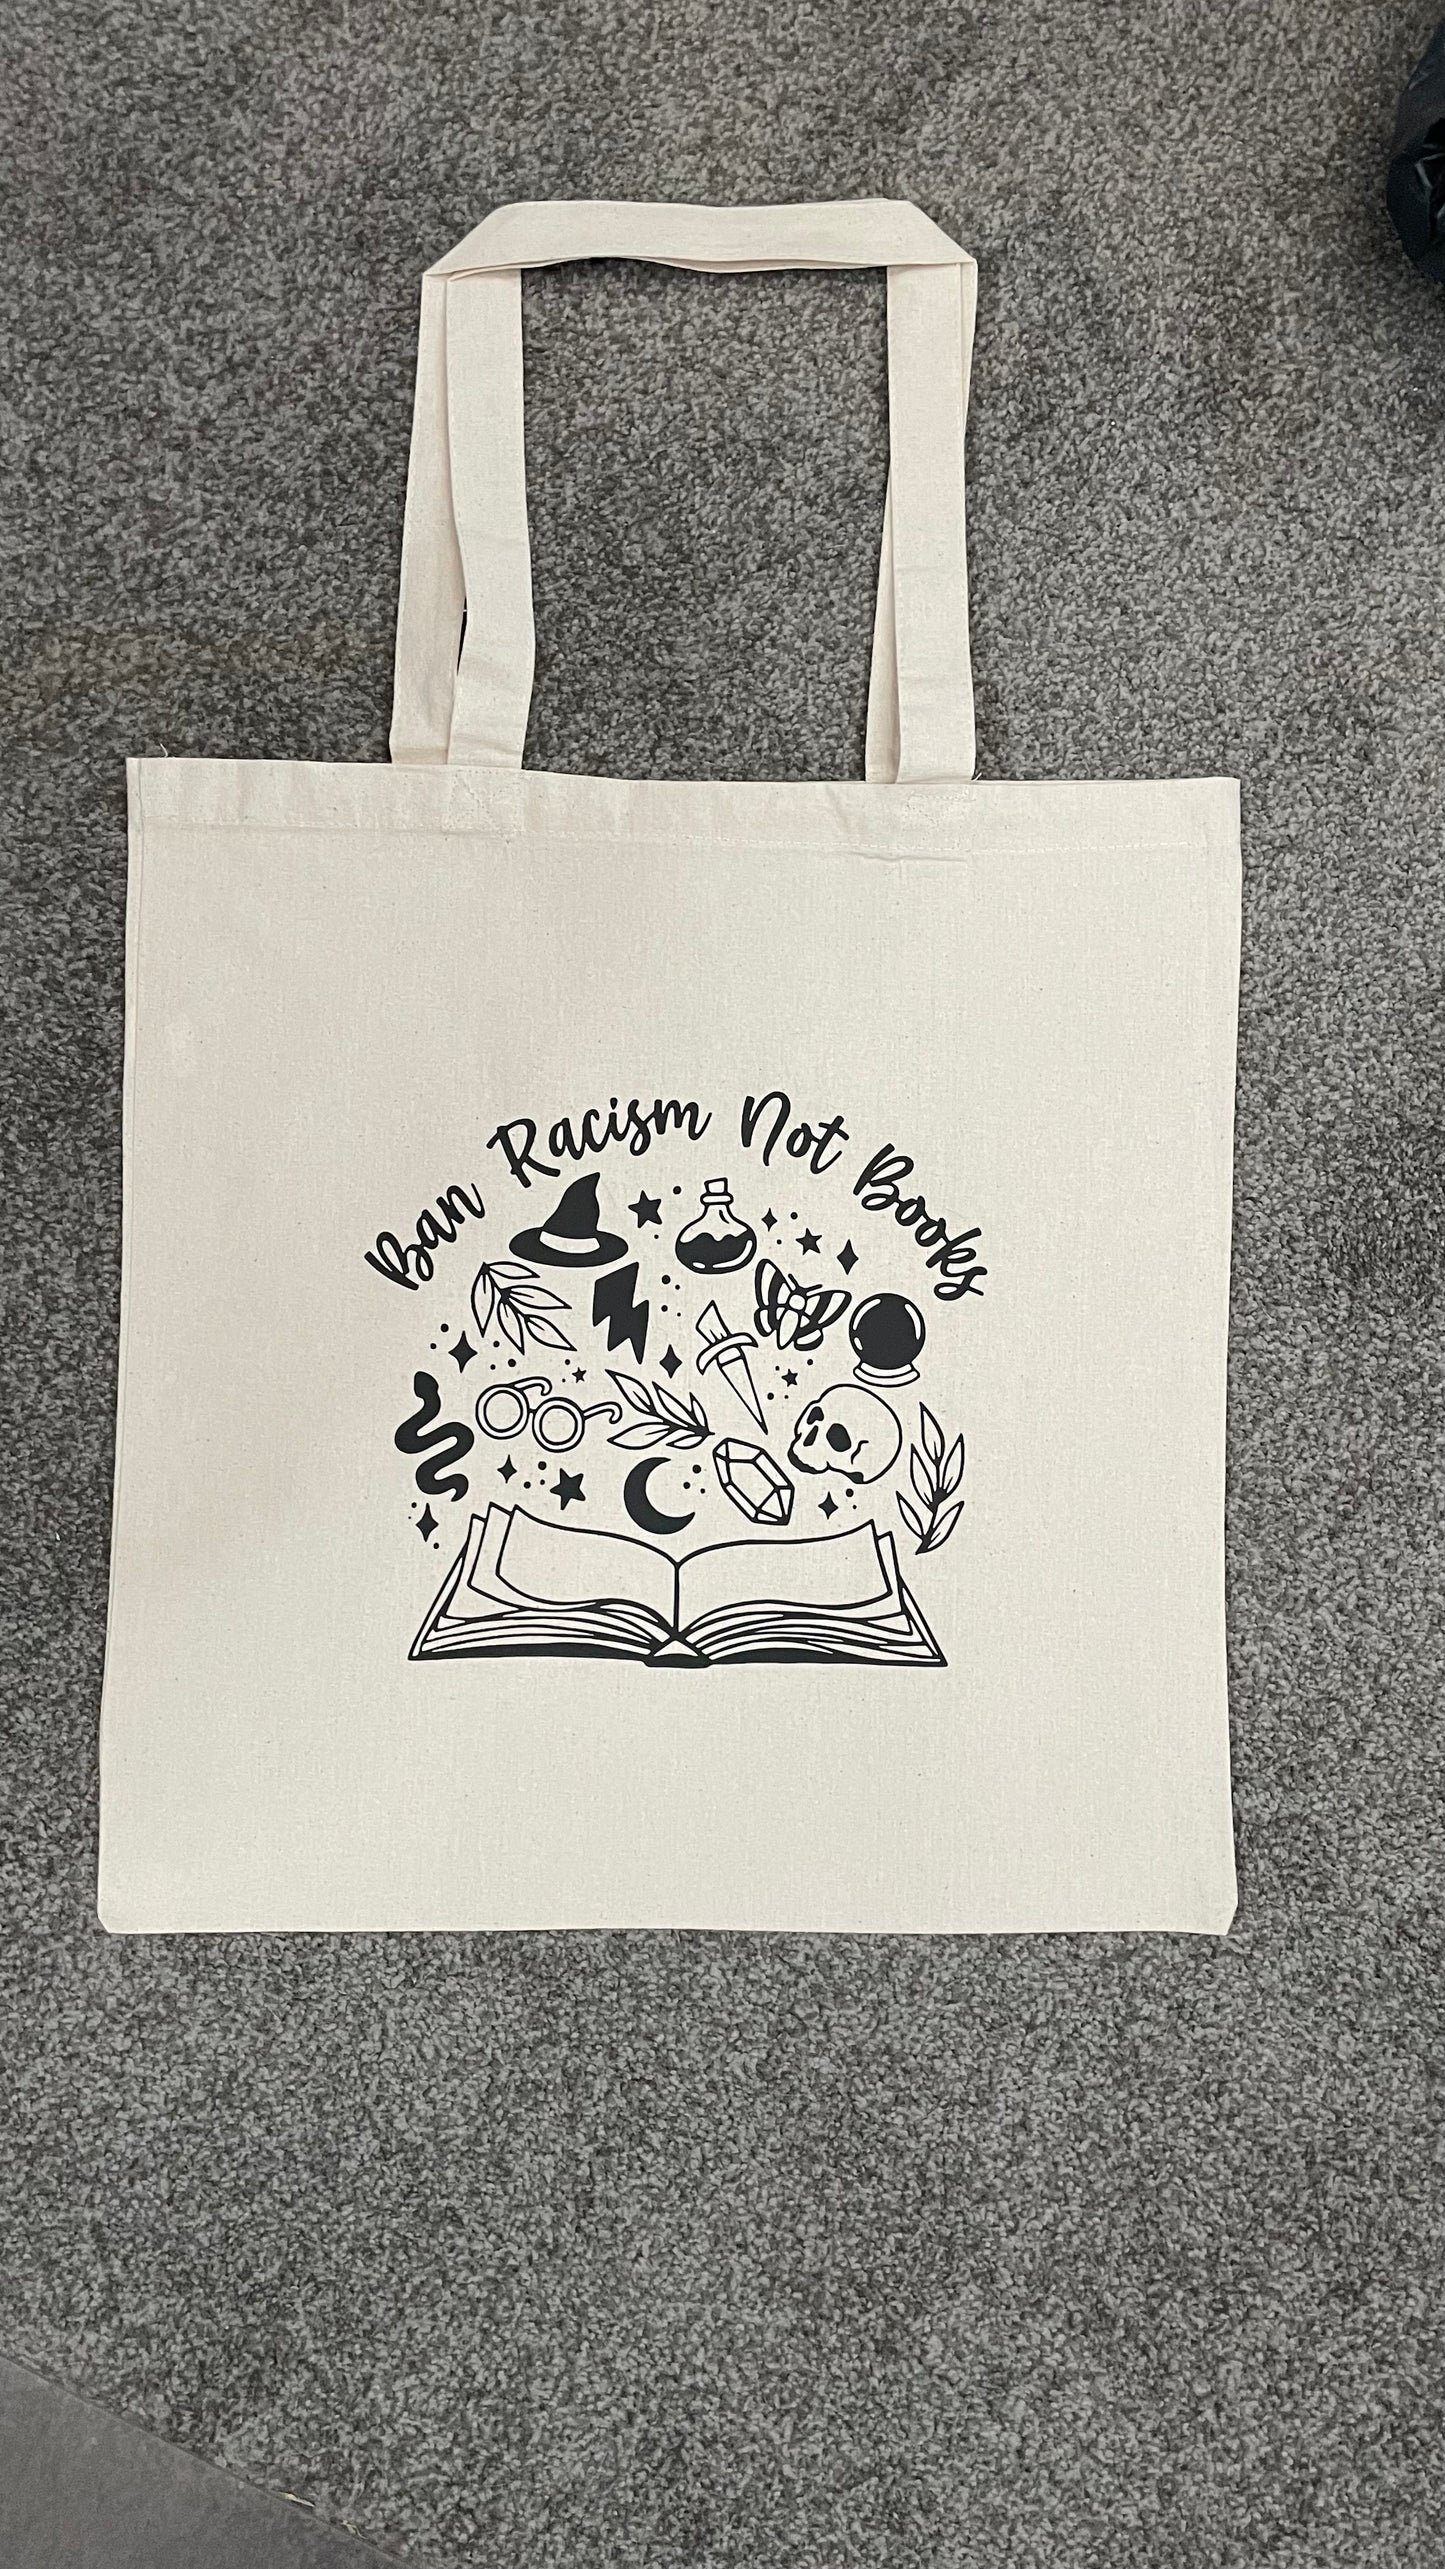 Ban Racism Not Books Tote Bag